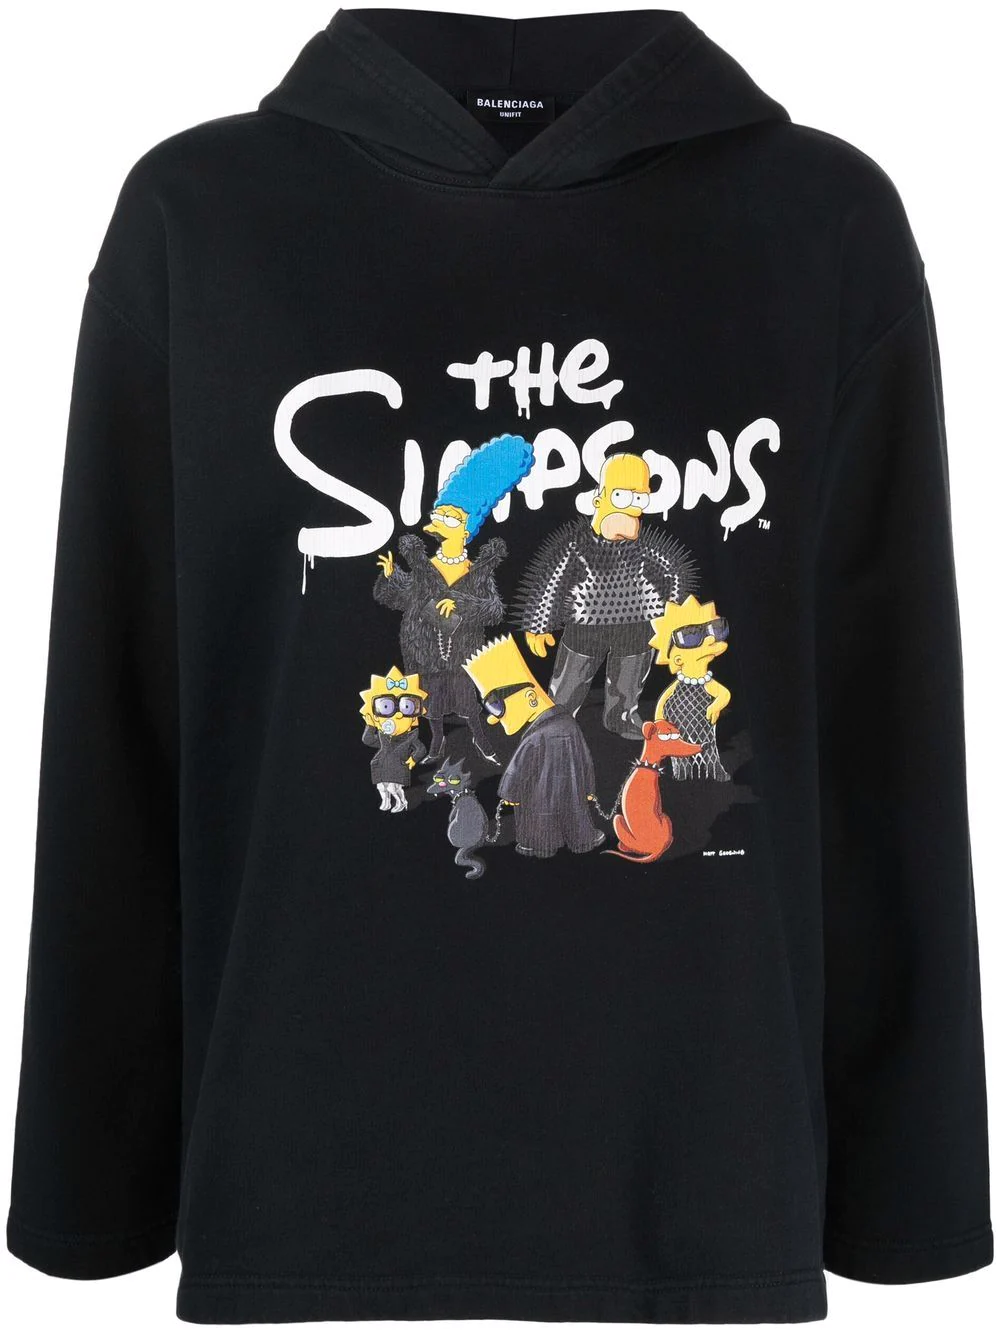 WHITEBalenciaga x The Simpsons hoodie